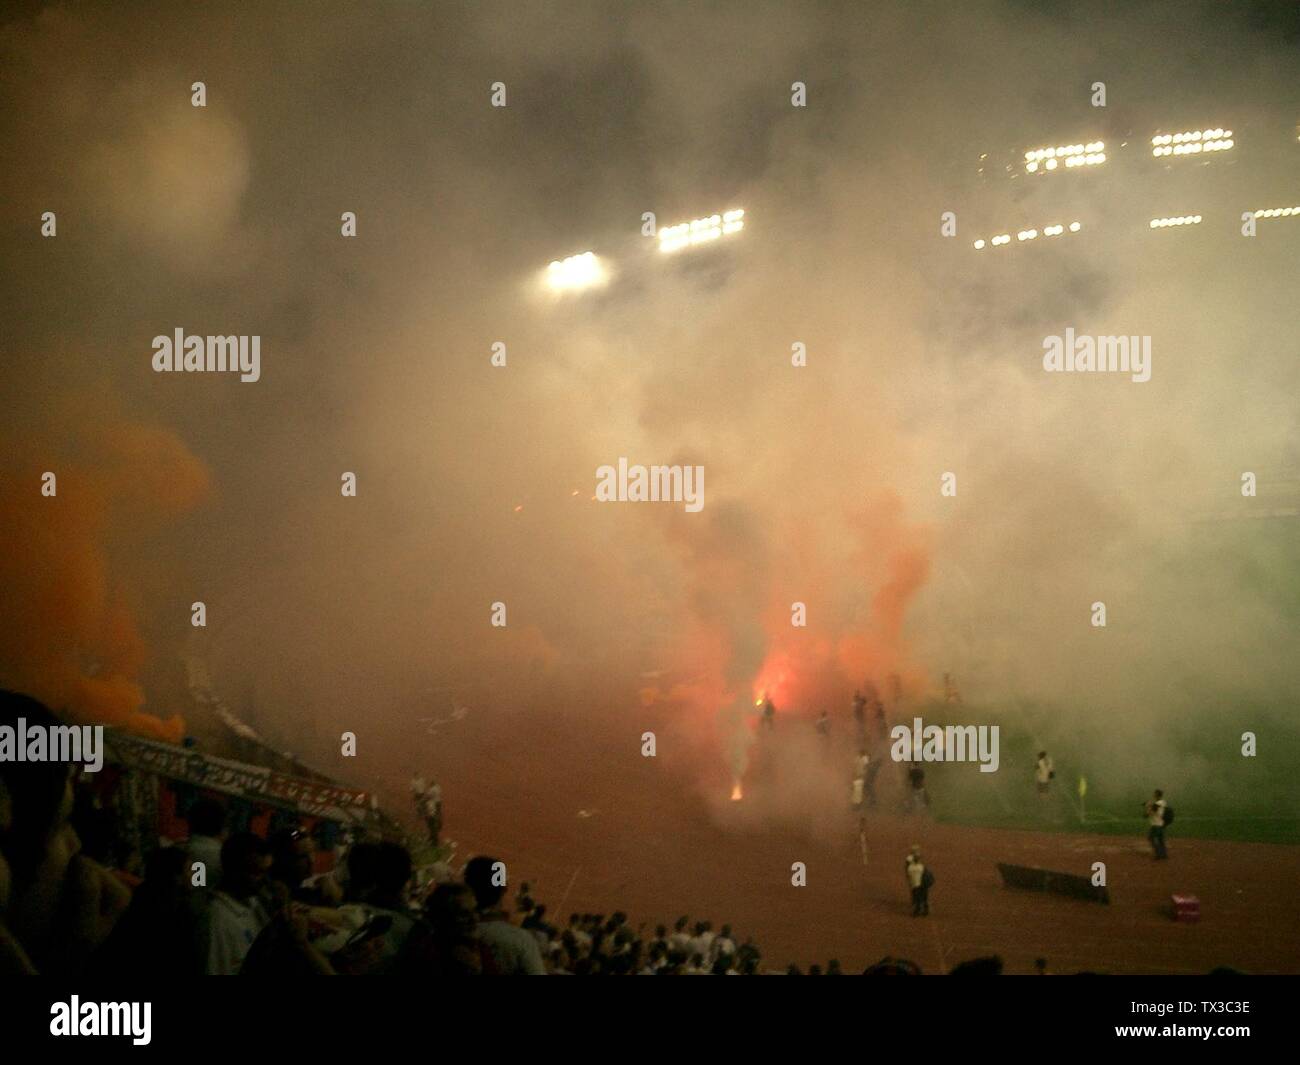 Torcida releases flares during Hajduk Split - Dinamo Zagreb derby.; 1 October 2006; Own work; West Brom 4ever; Stock Photo